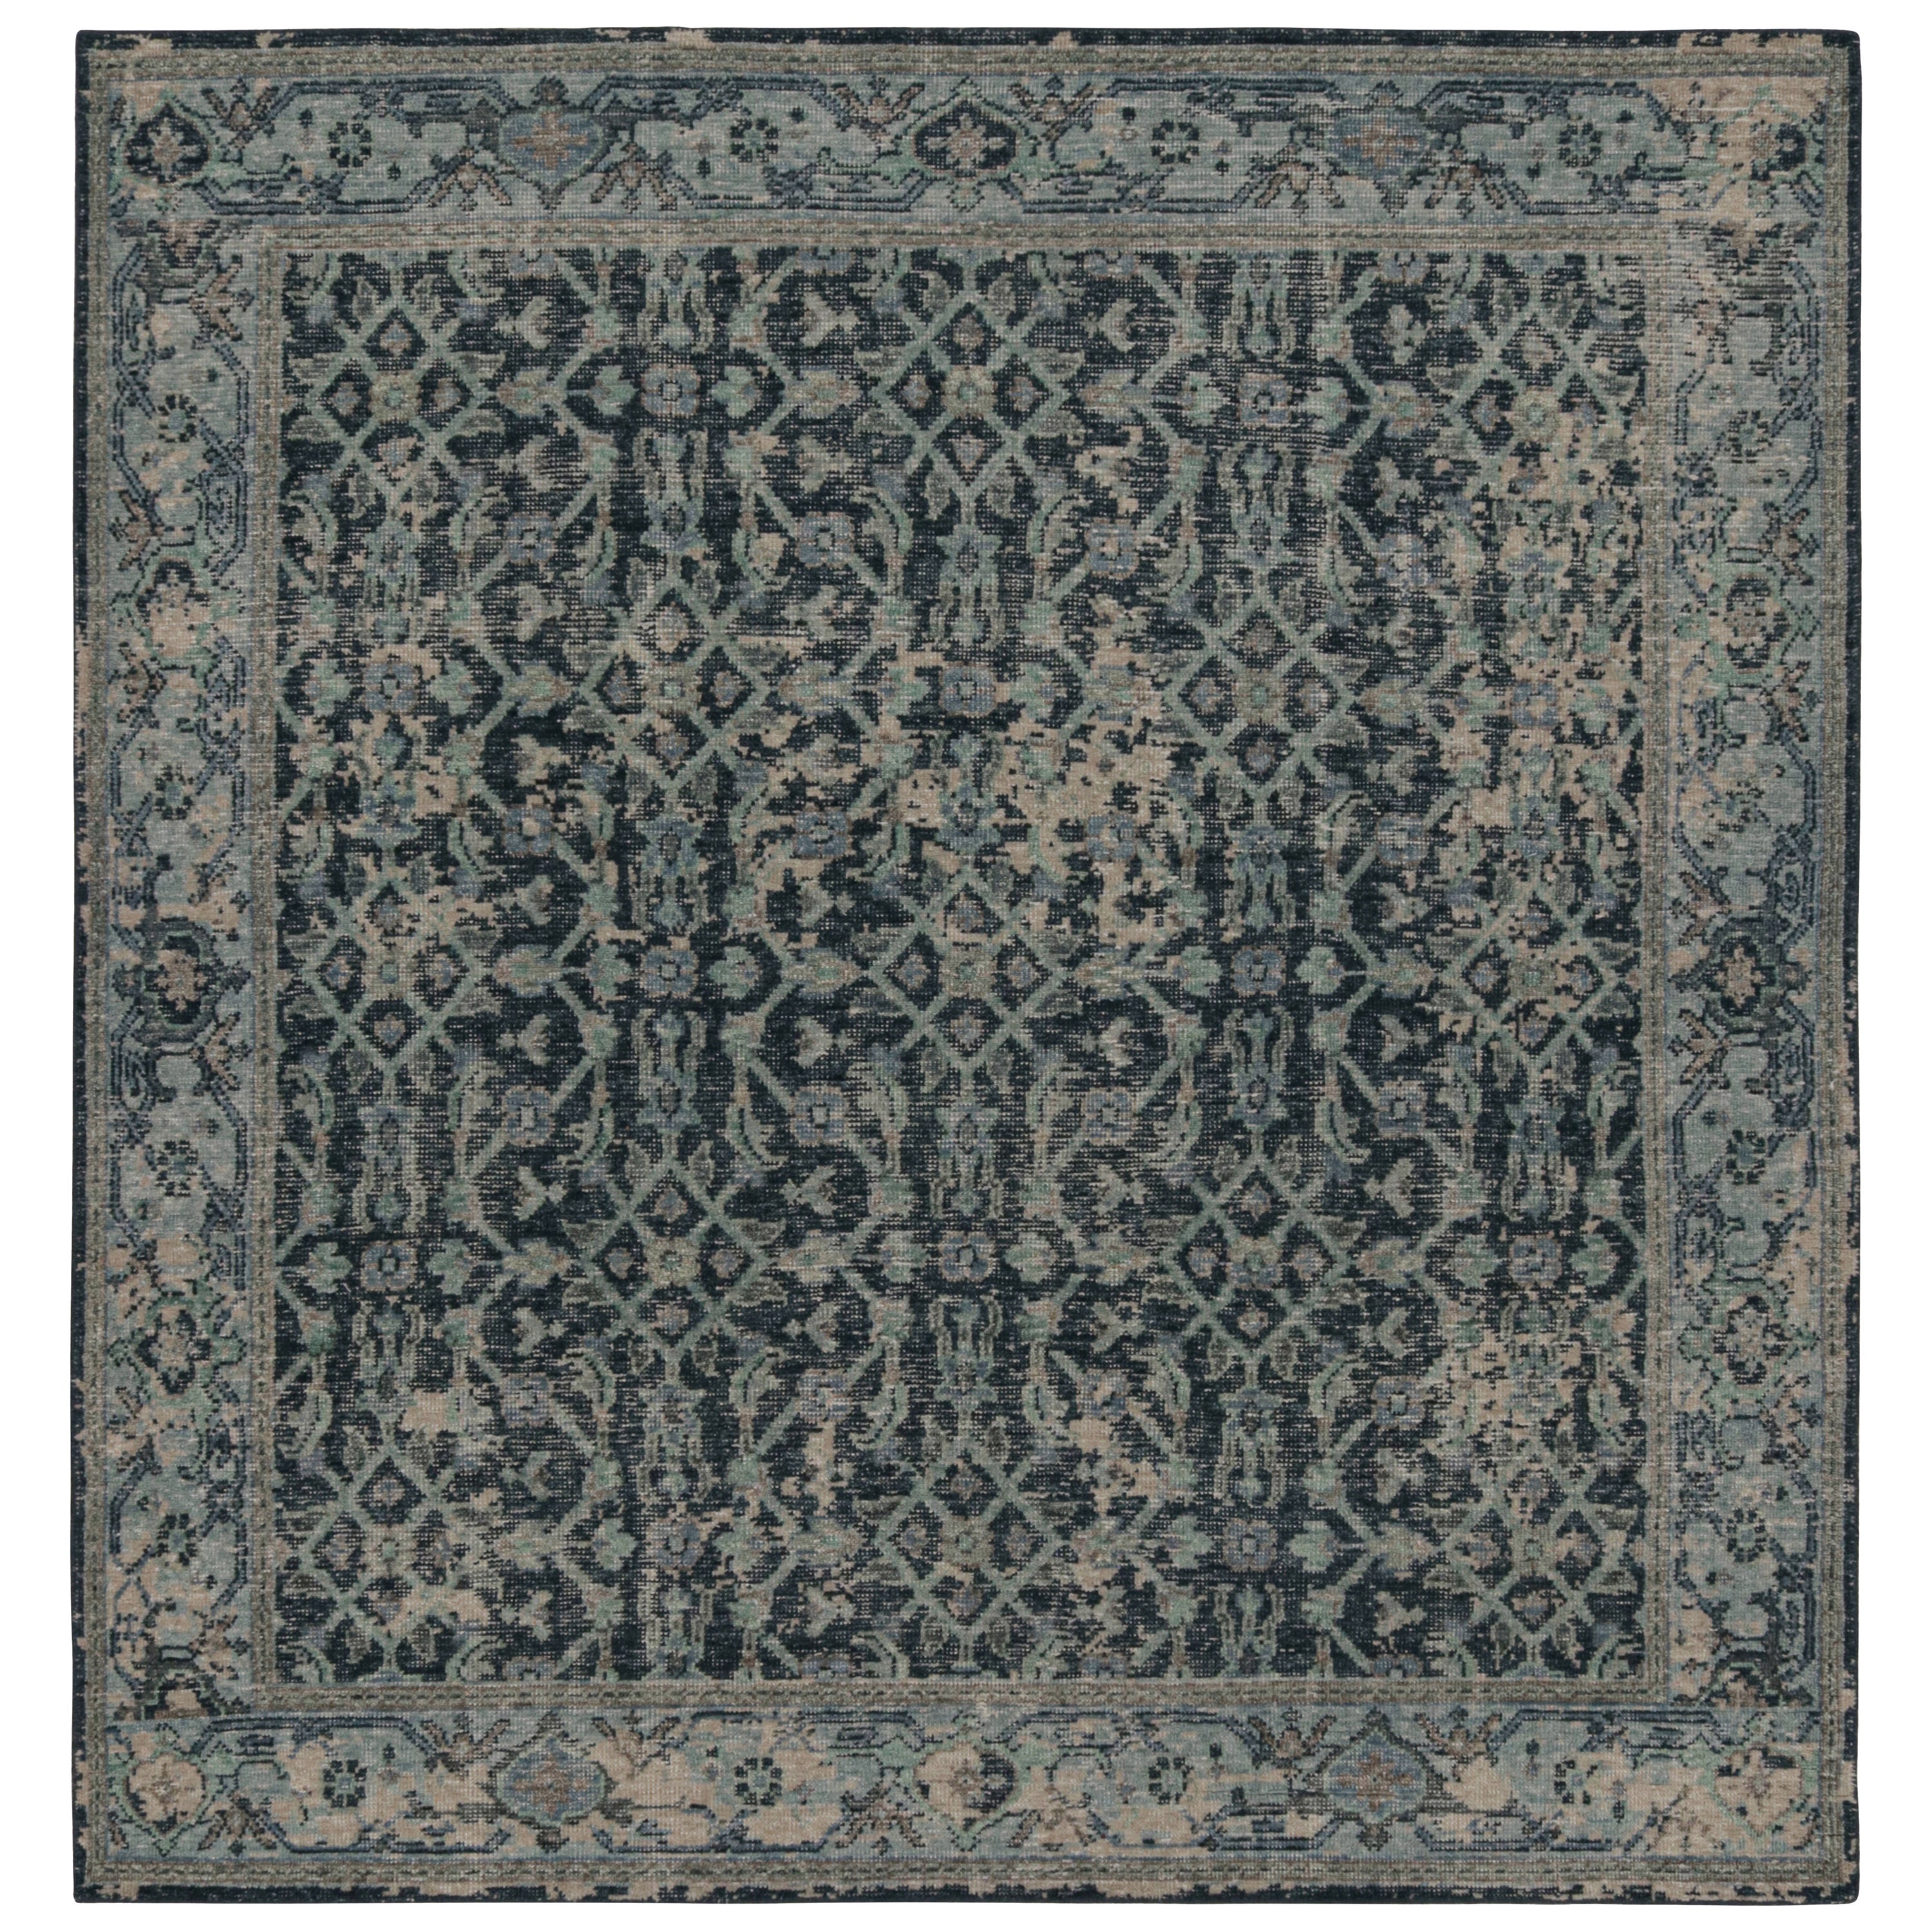 Rug & Kilim's Distressed Style Teppich in Blau mit floralen Mustern